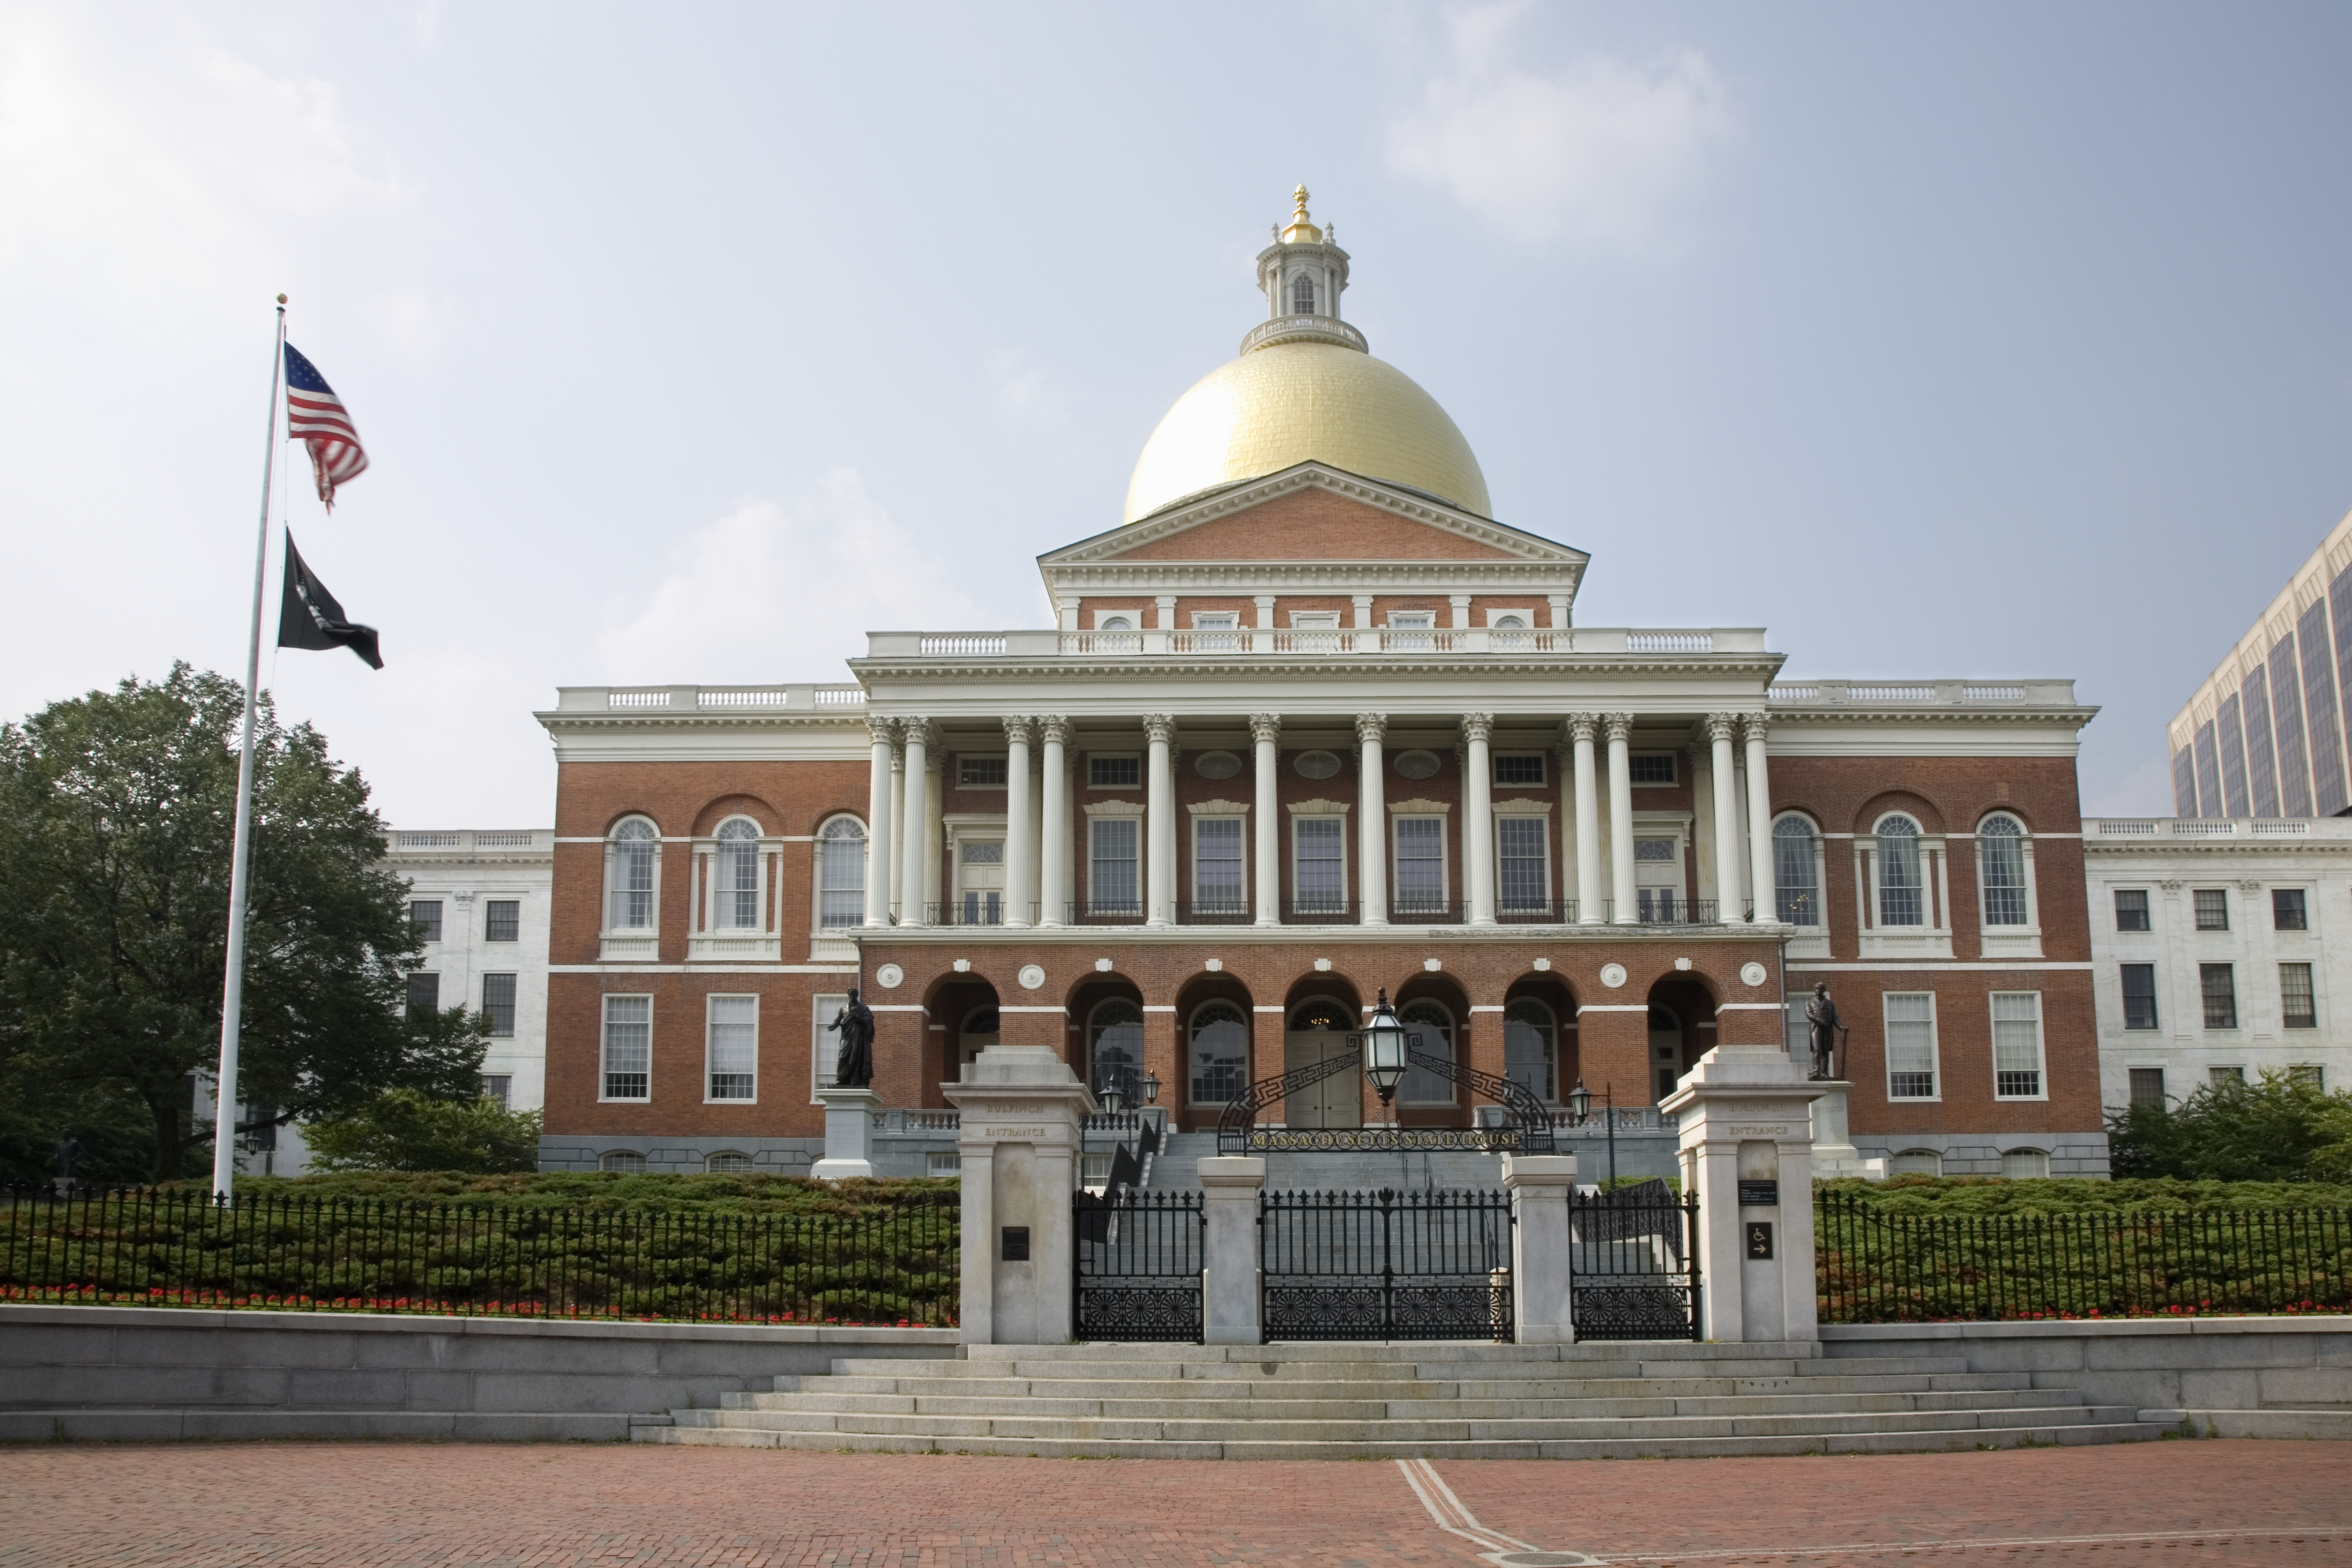 State House, Boston, Massachusetts, USA